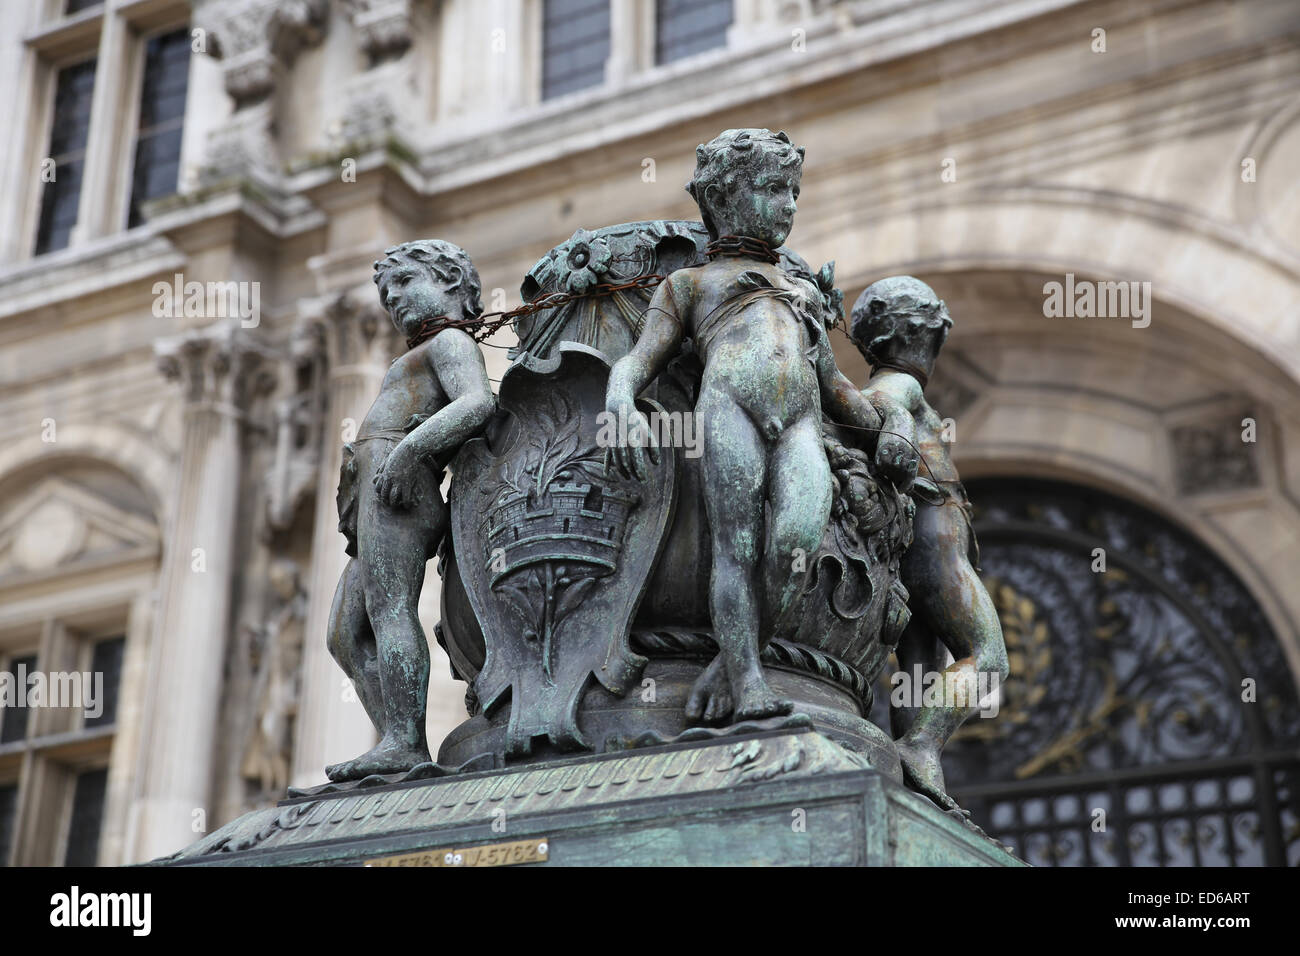 Paris city hall boy sculptures Stock Photo